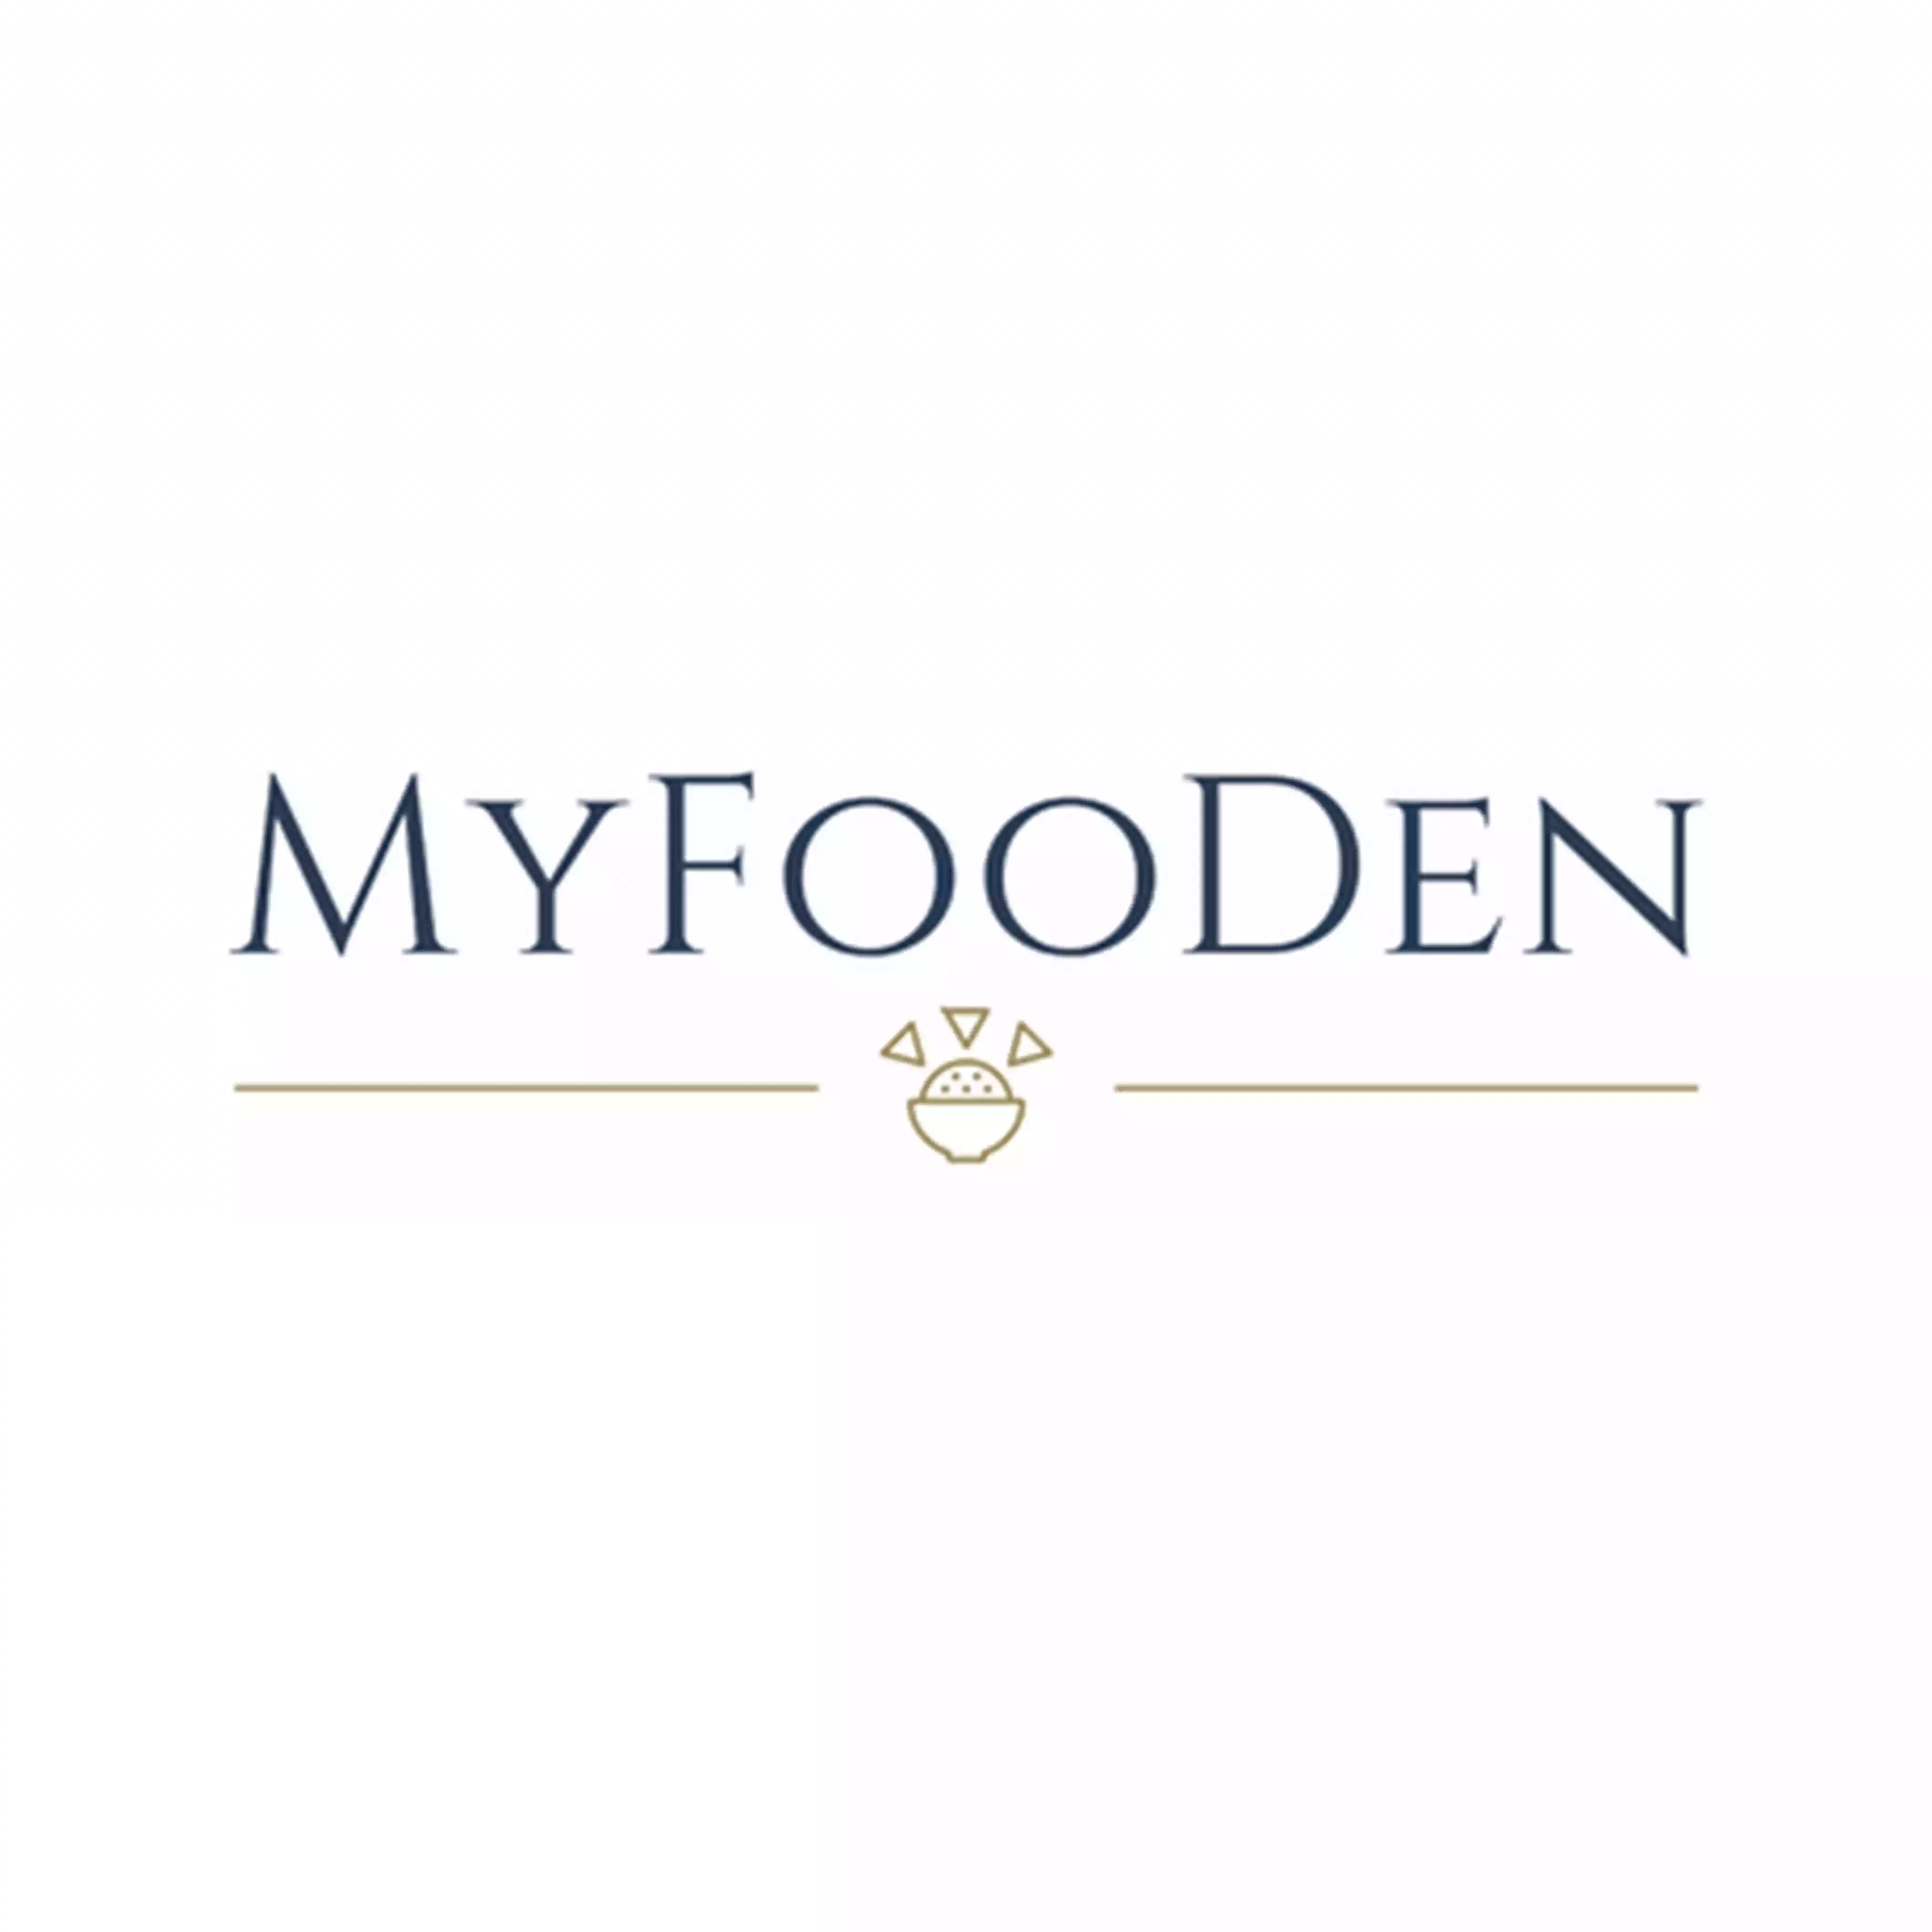 Myfooden logo